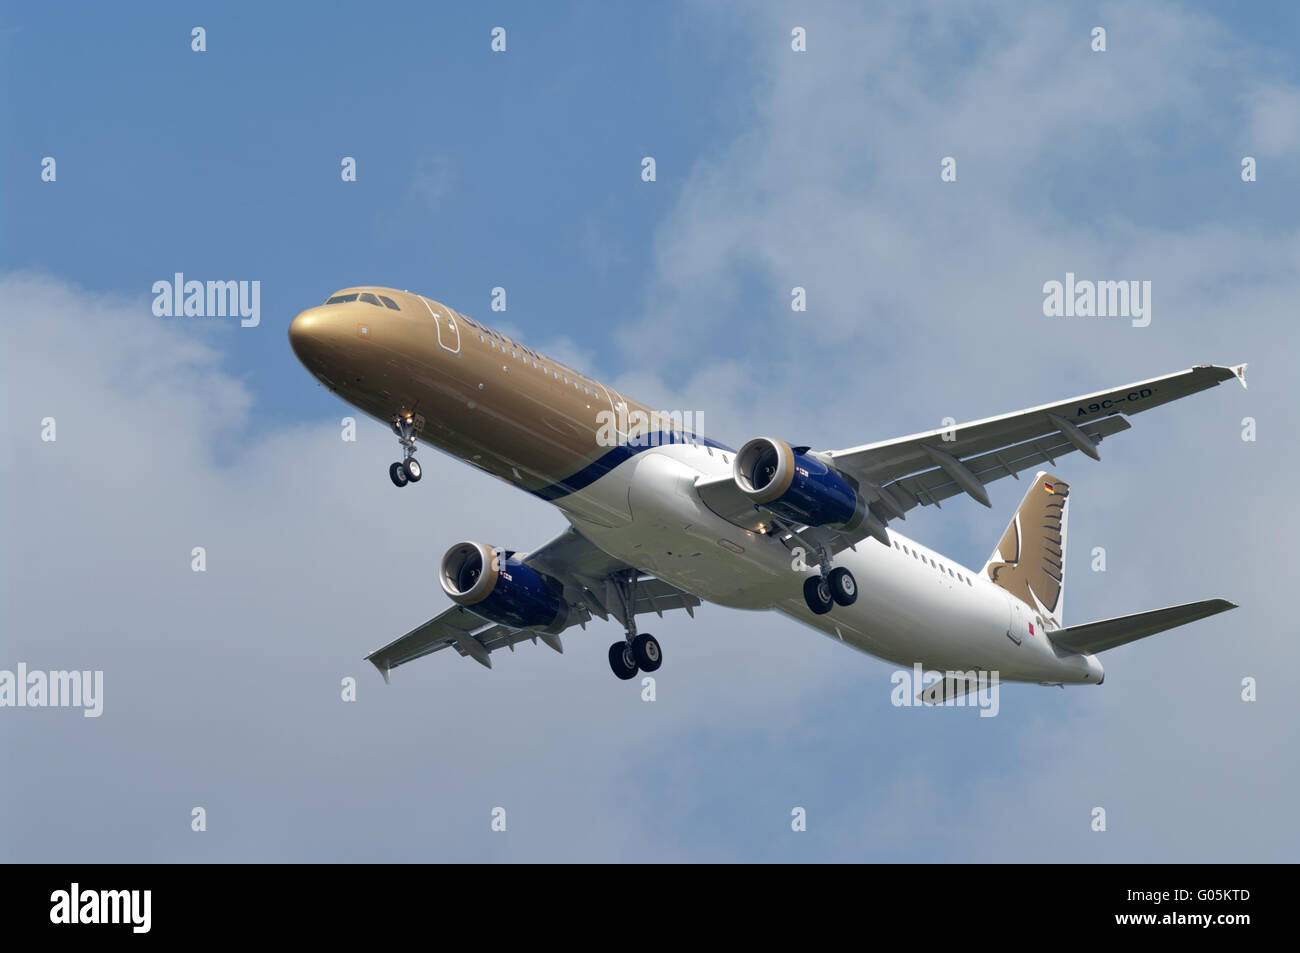 airbus landing Stock Photo